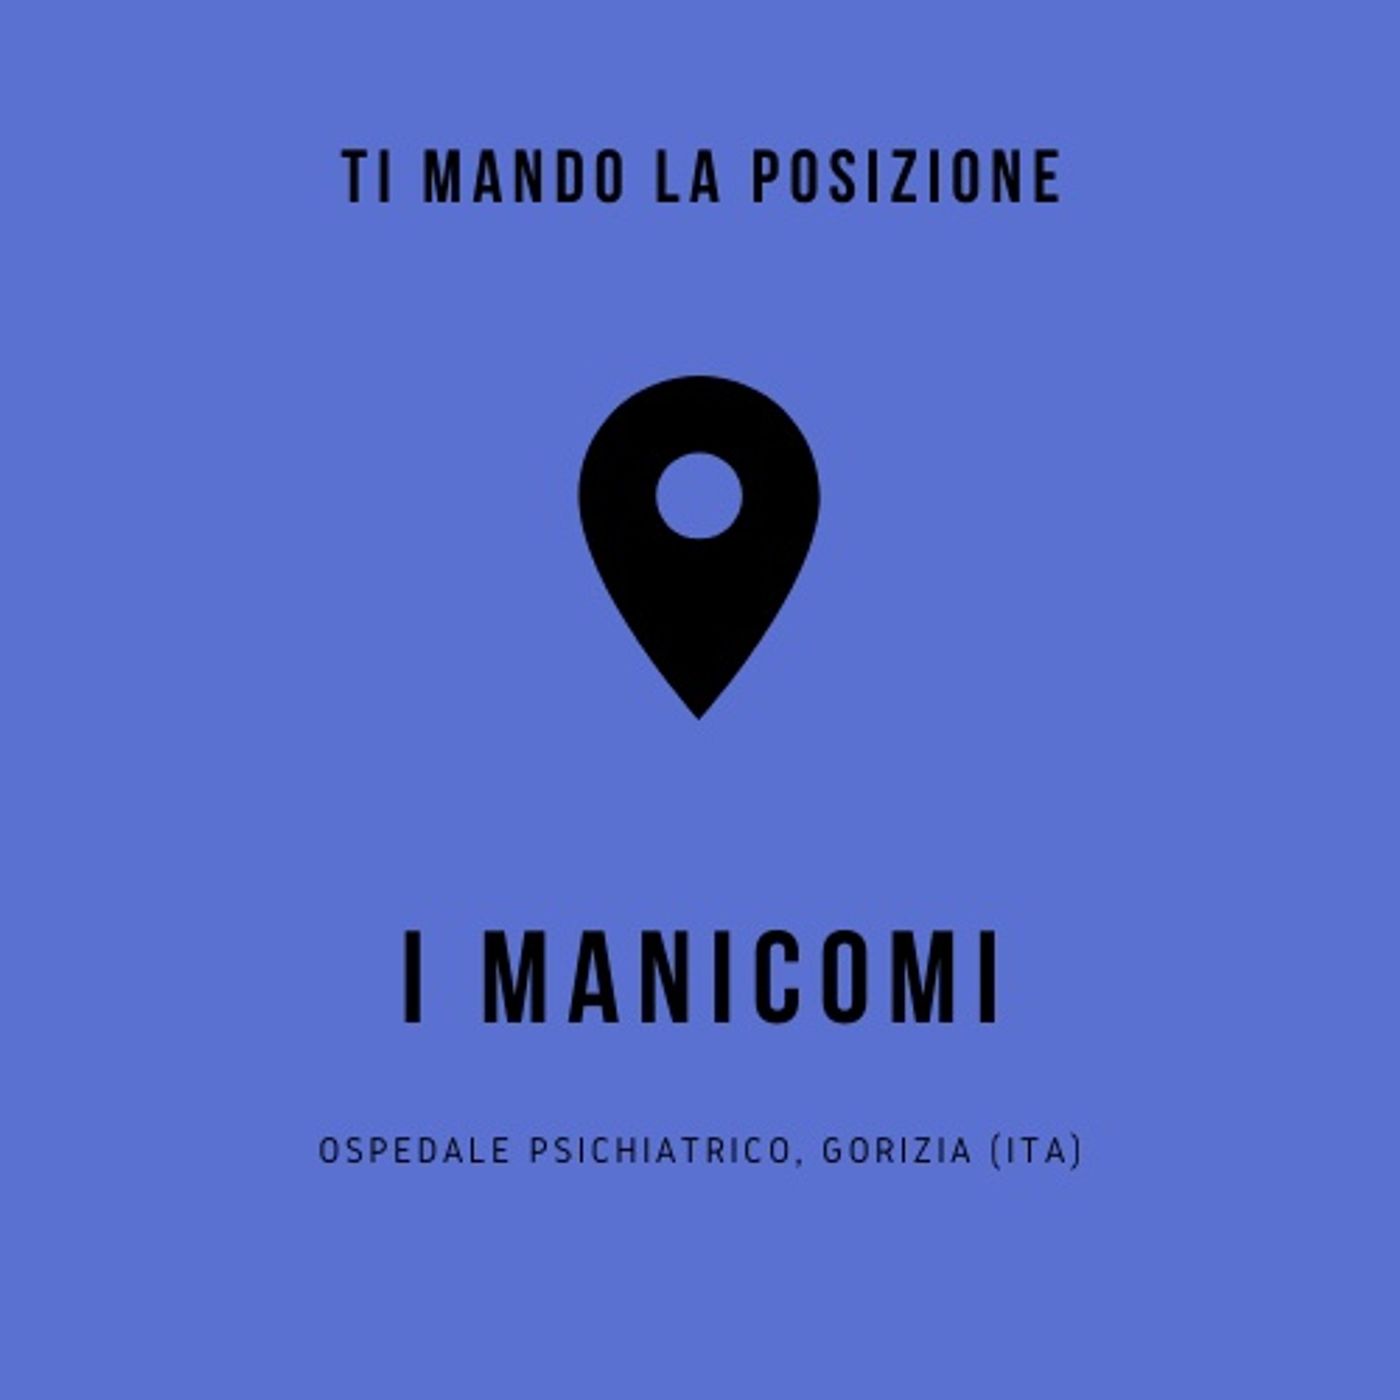 I manicomi - Ospedale psichiatrico, Gorizia (ITA)